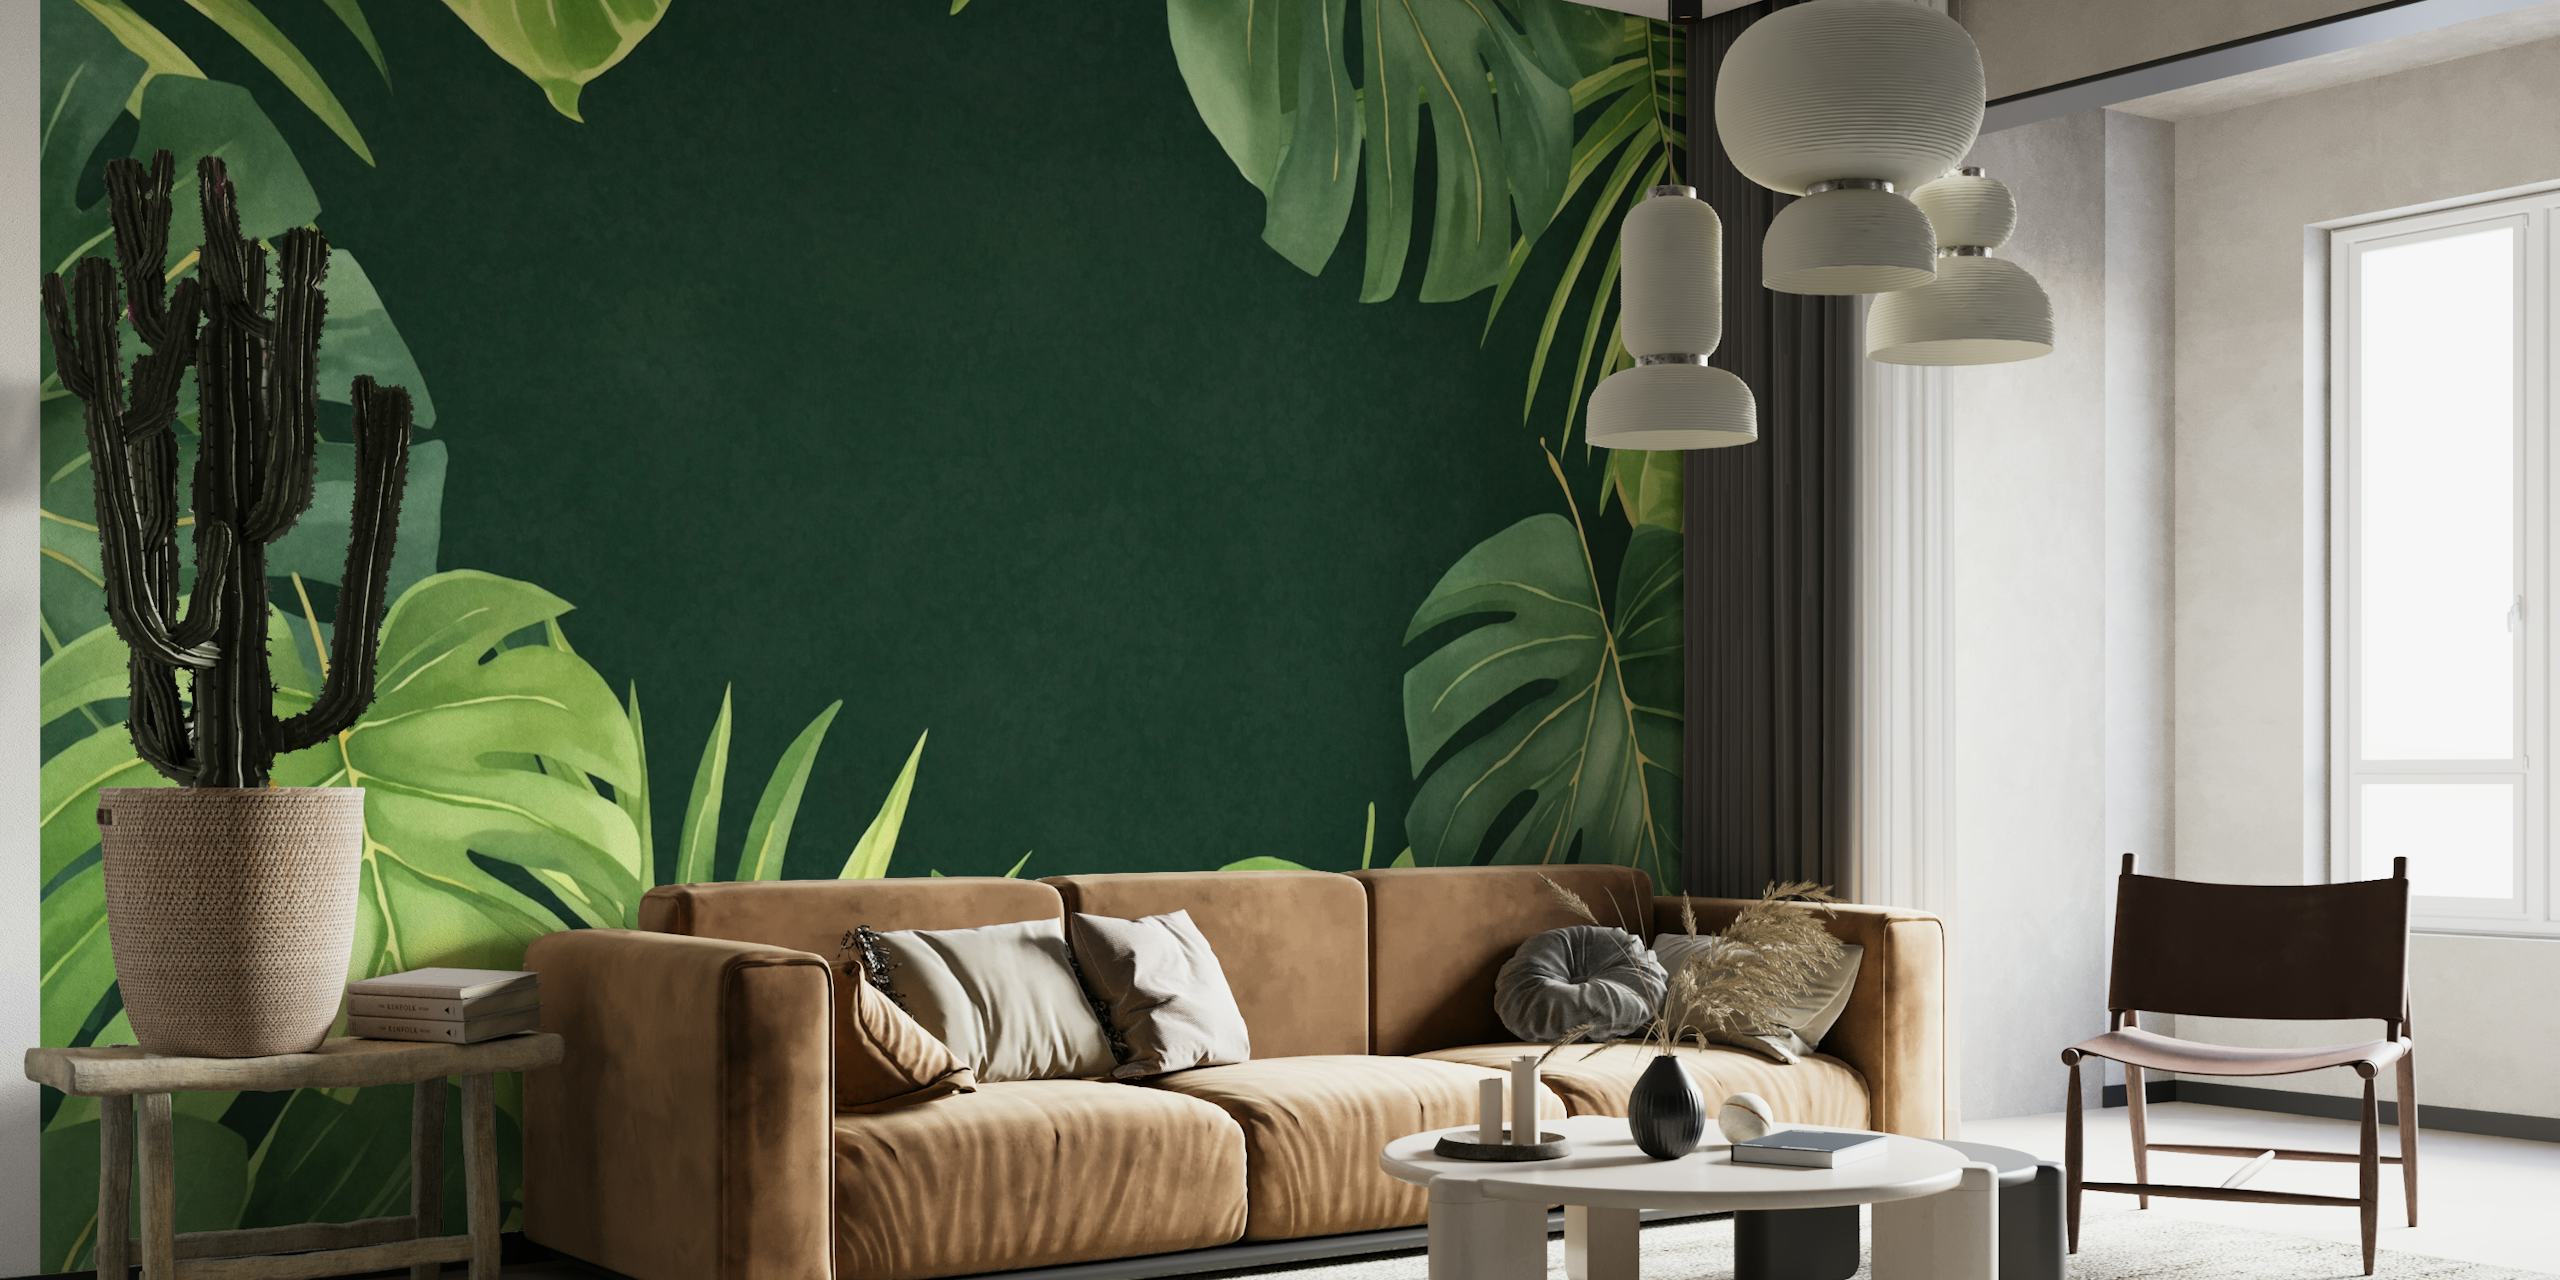 Lush Green Tropical Foliage Perfection wallpaper